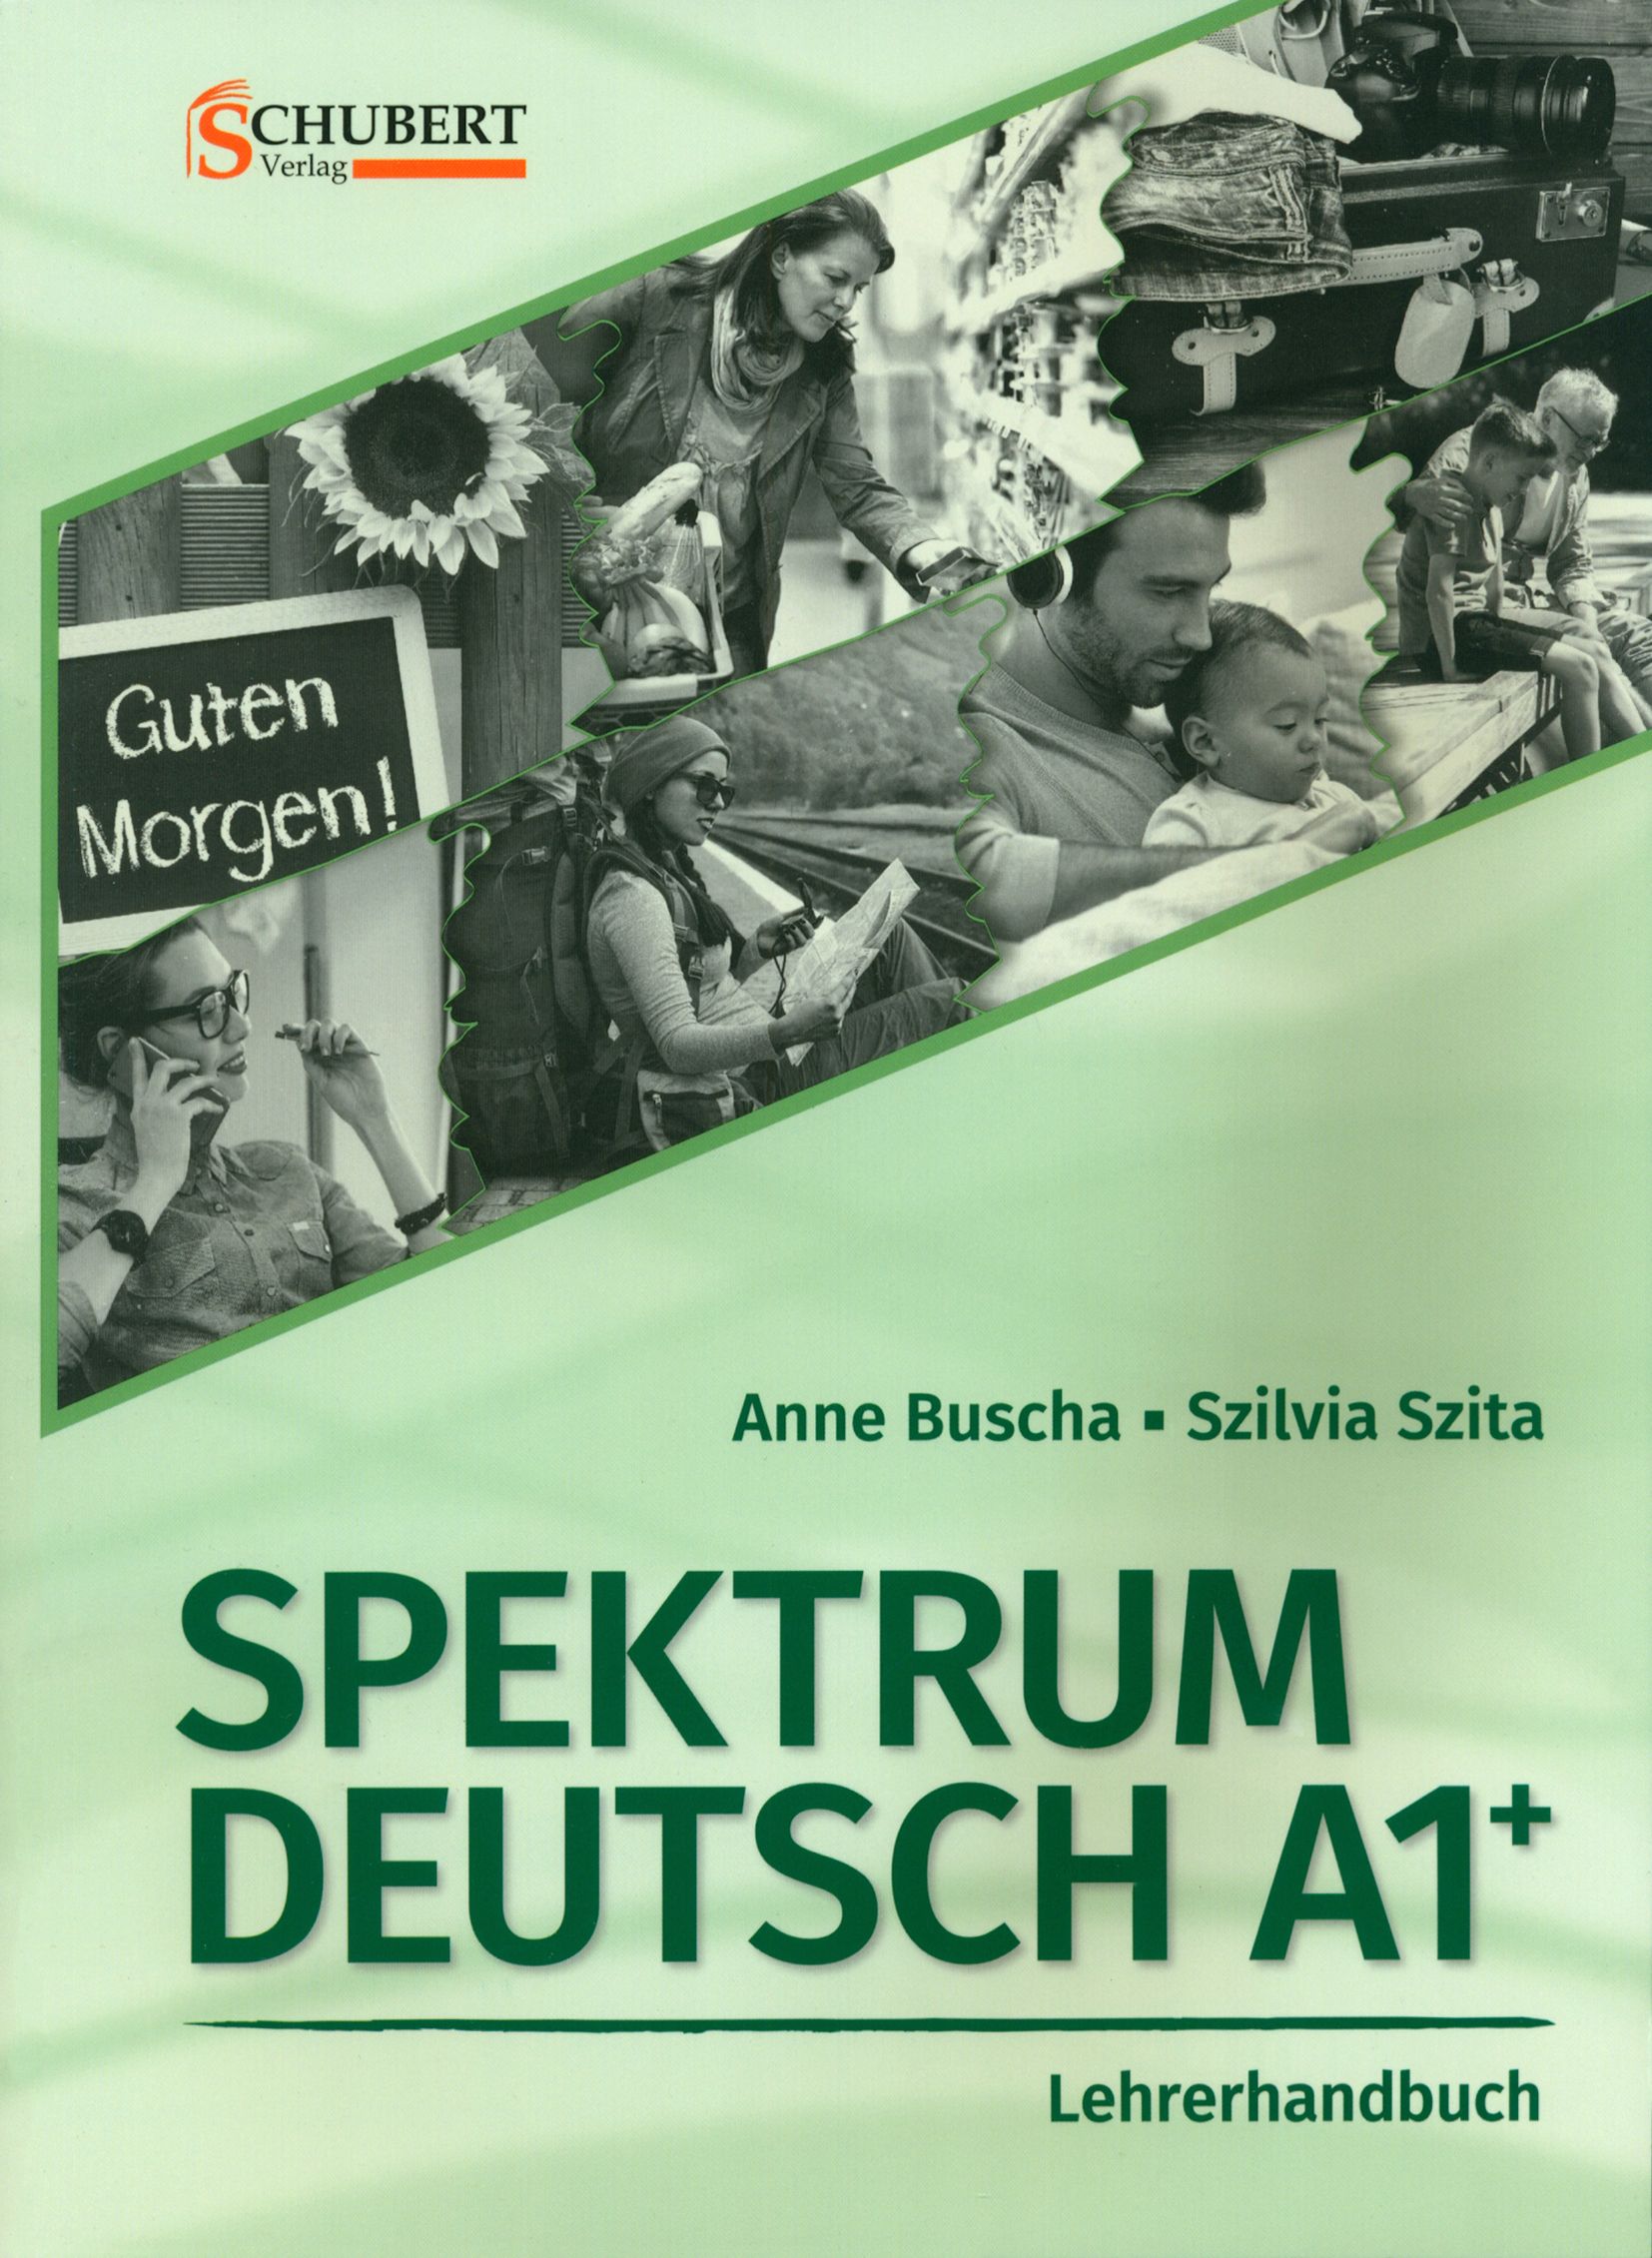 Спектрум учебник немецкого. Spektrum немецкий. Spektrum учебник немецкого языка. Spektrum Deutsch a1 Wiederholungstest ответы. Spektrum Deutsch b1 ответы.